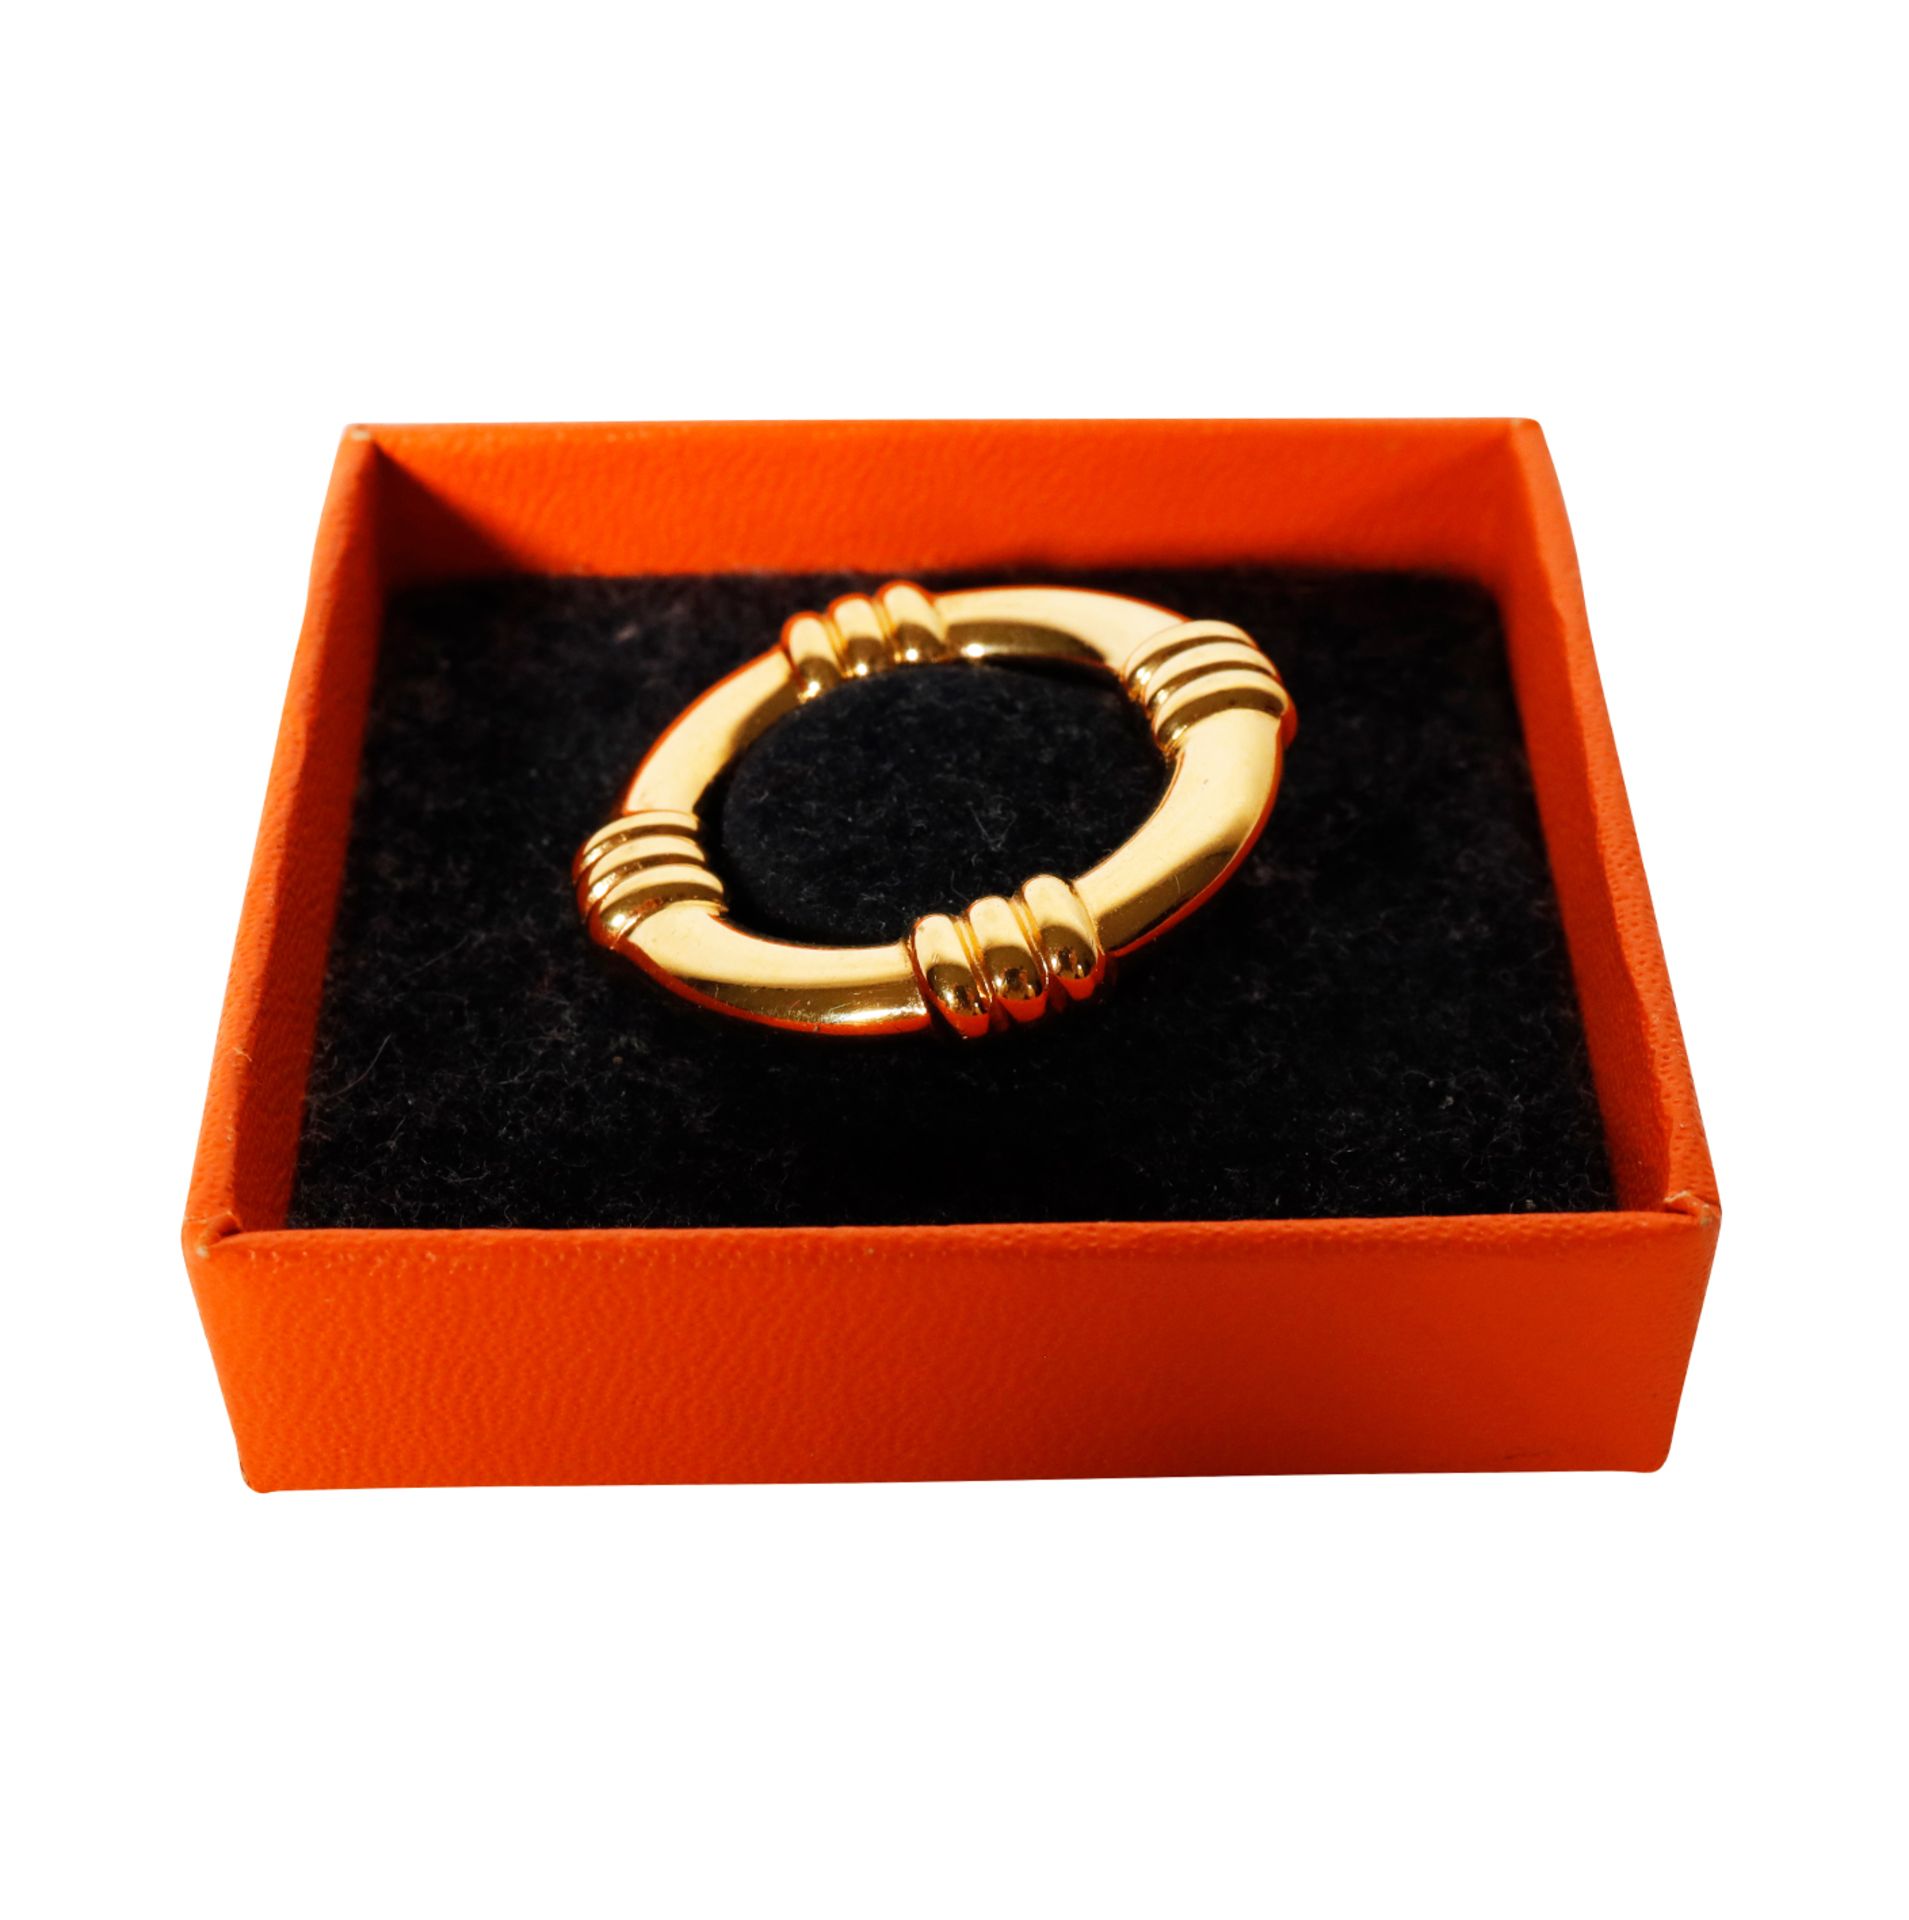 Hermes Schal Ring - Image 2 of 2